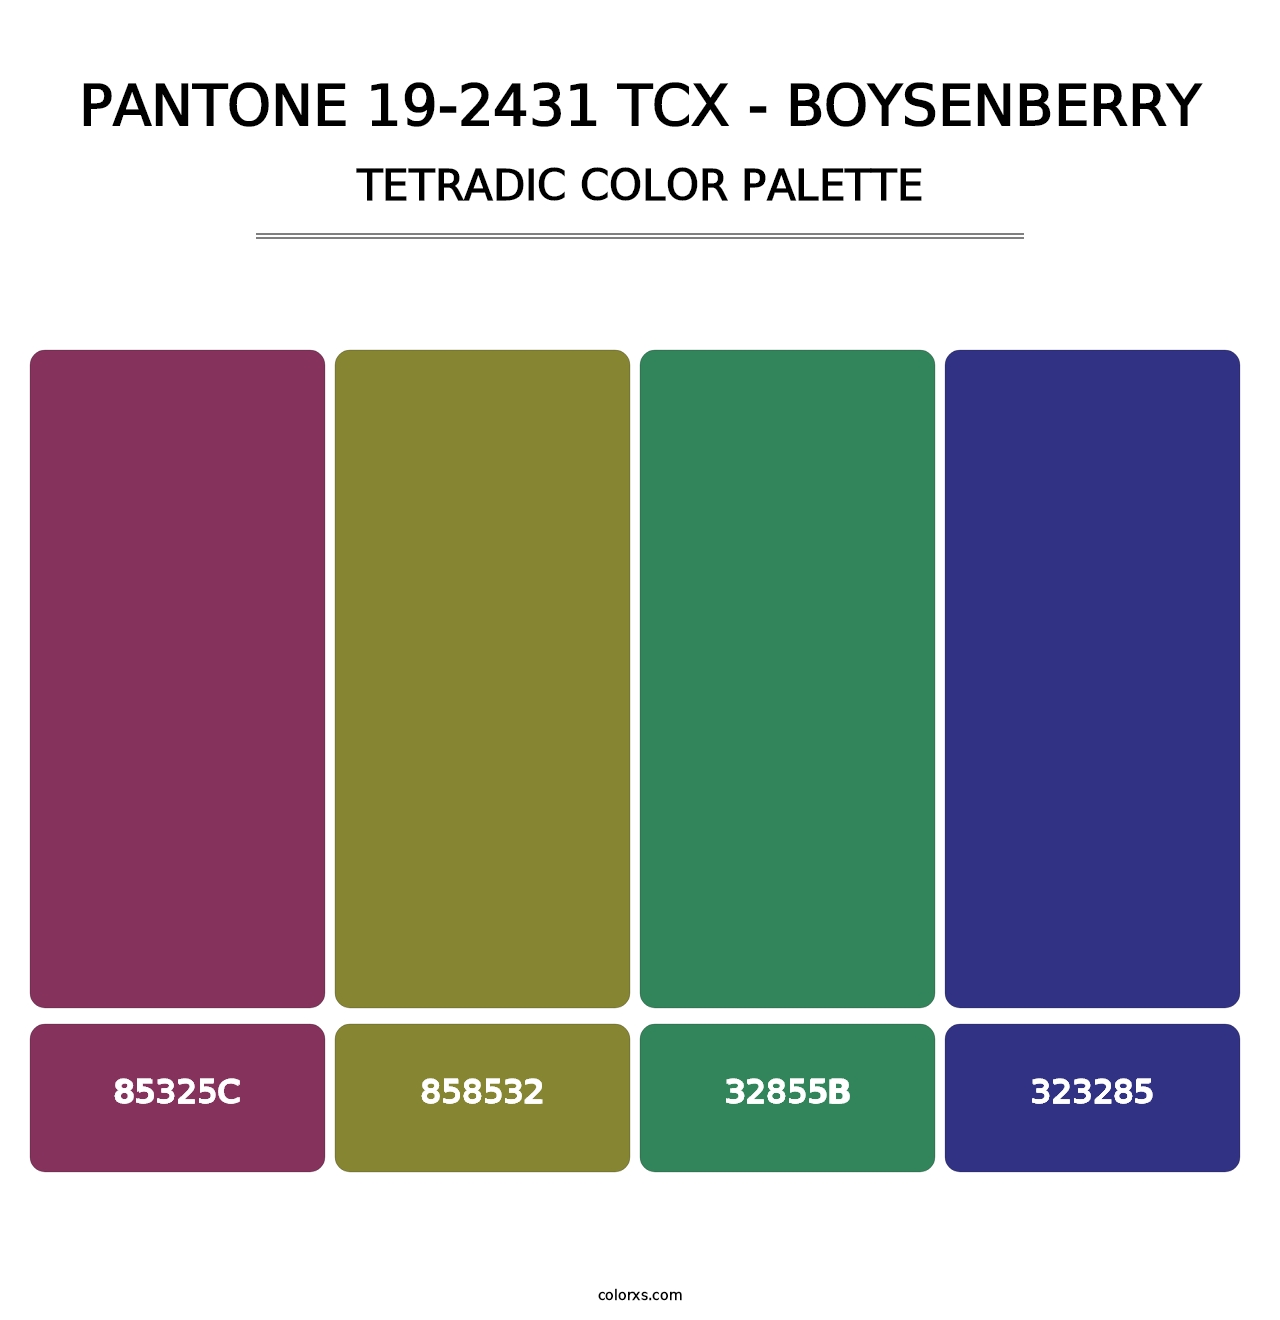 PANTONE 19-2431 TCX - Boysenberry - Tetradic Color Palette